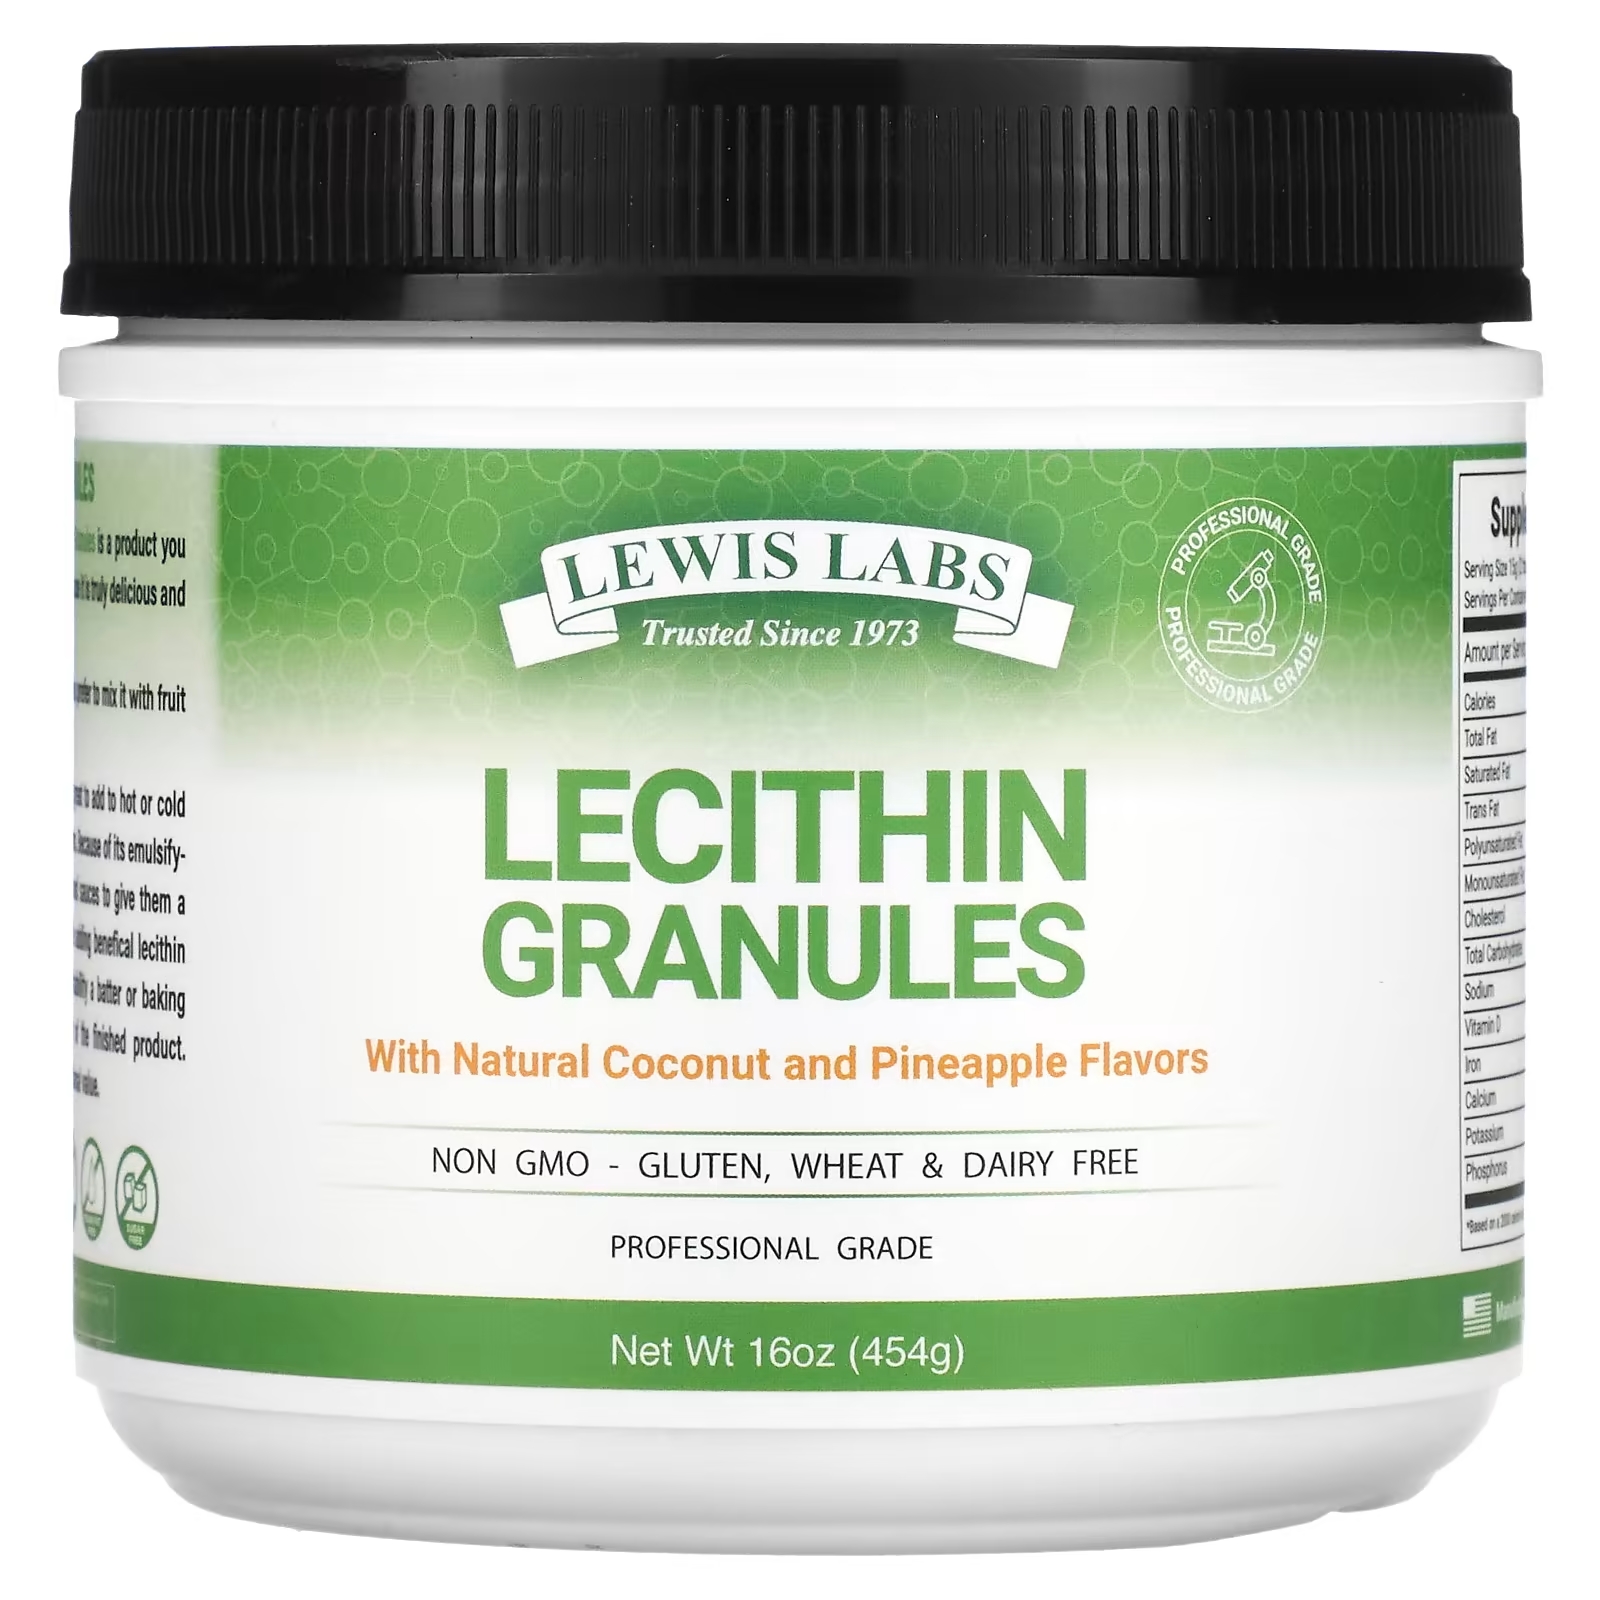 Lewis Labs Lecithin Granules Natural Coconut and Pineapple, 454г lewis labs lecithin granules natural coconut and pineapple 16 oz 454 g